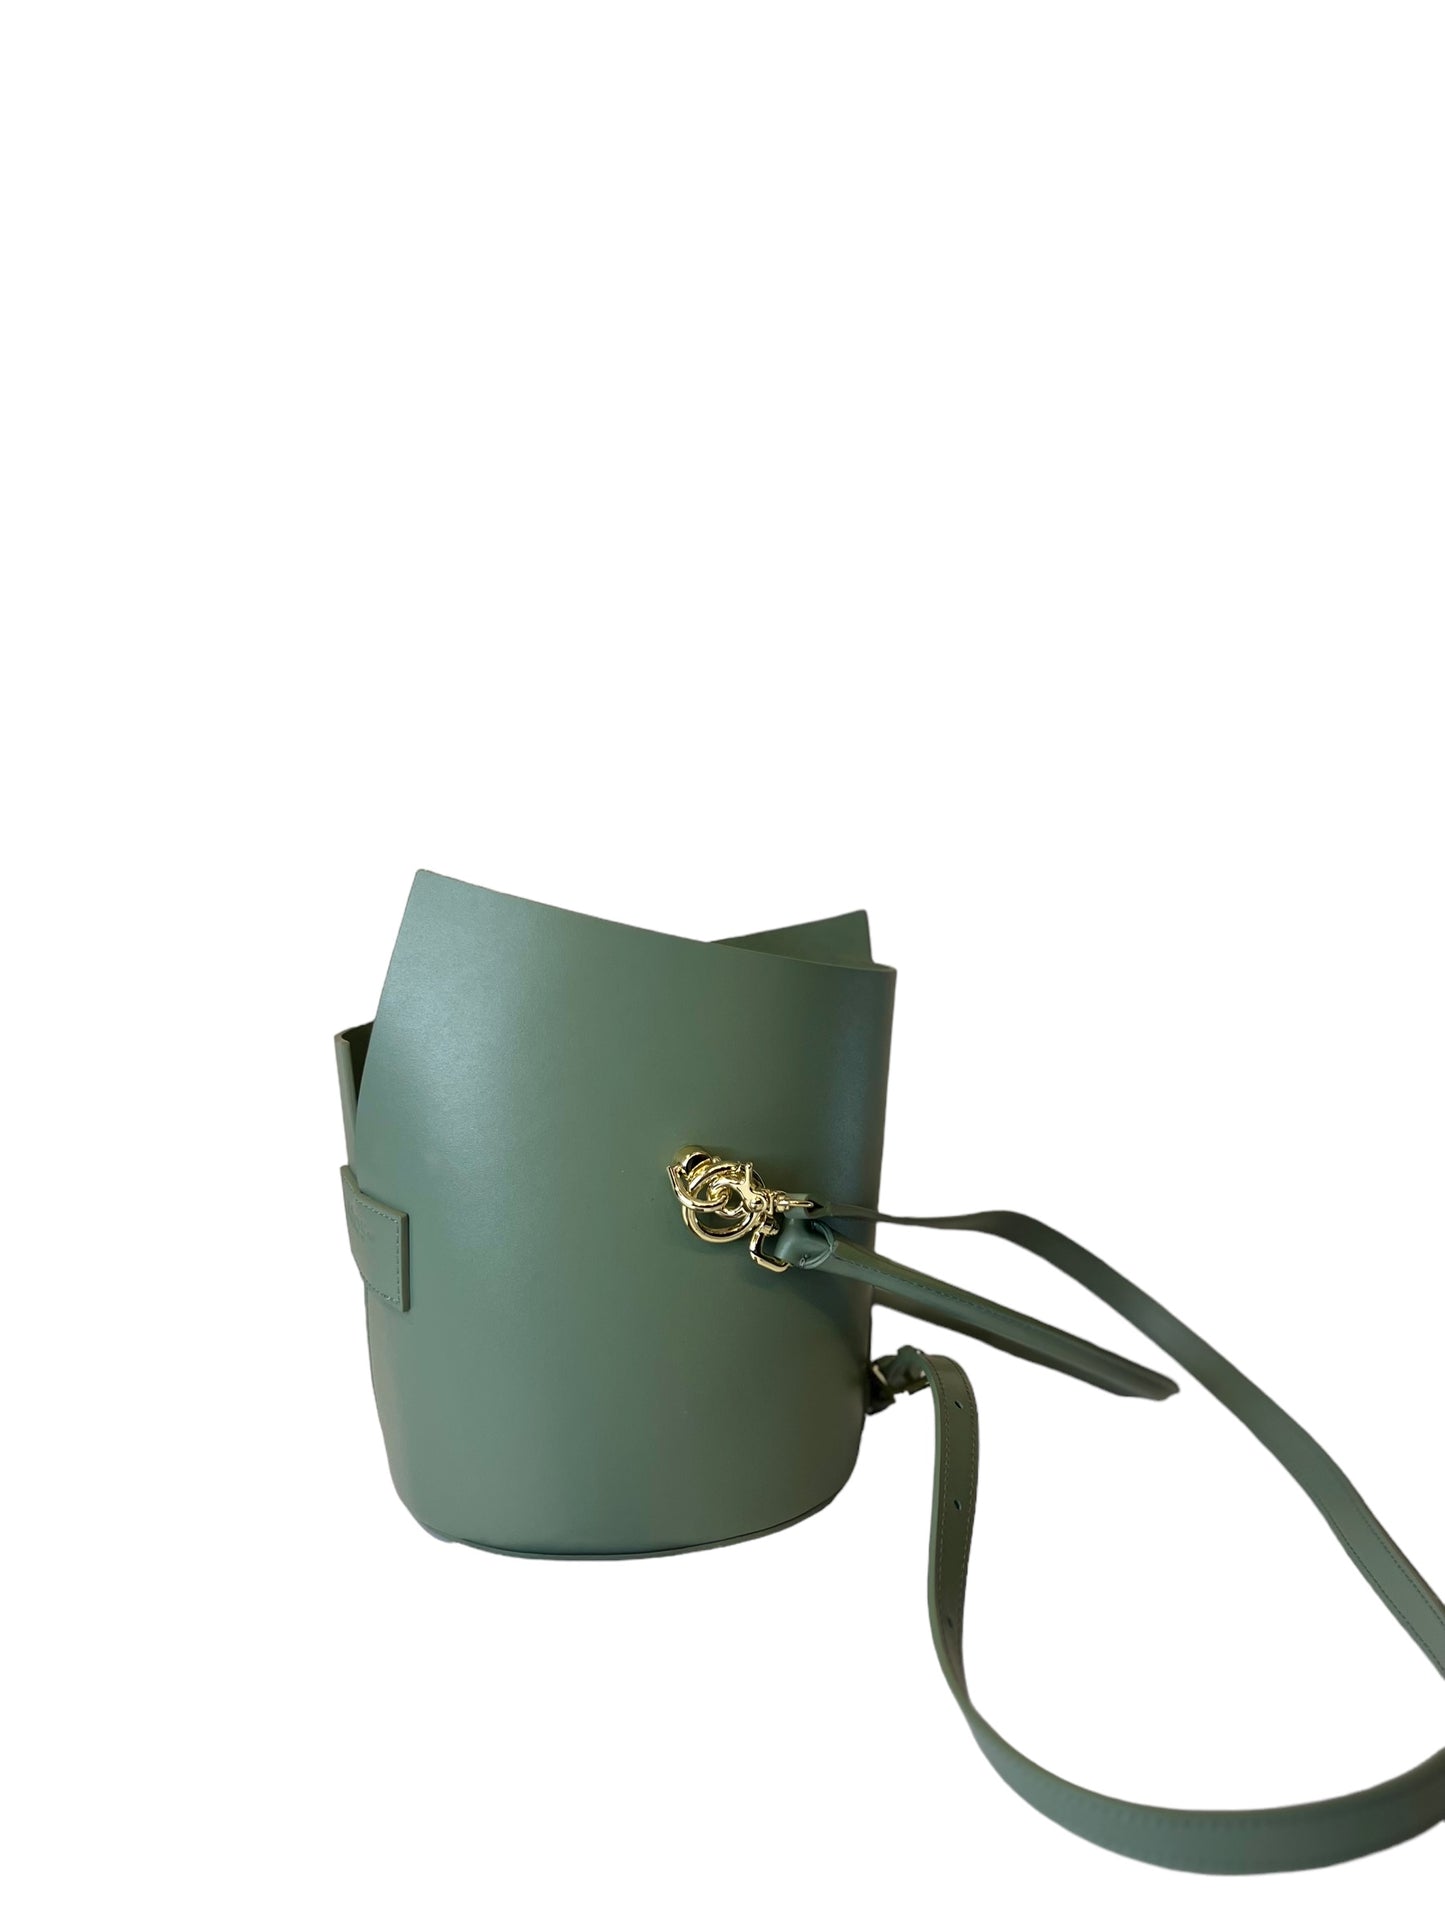 Aros light green/khaki bag